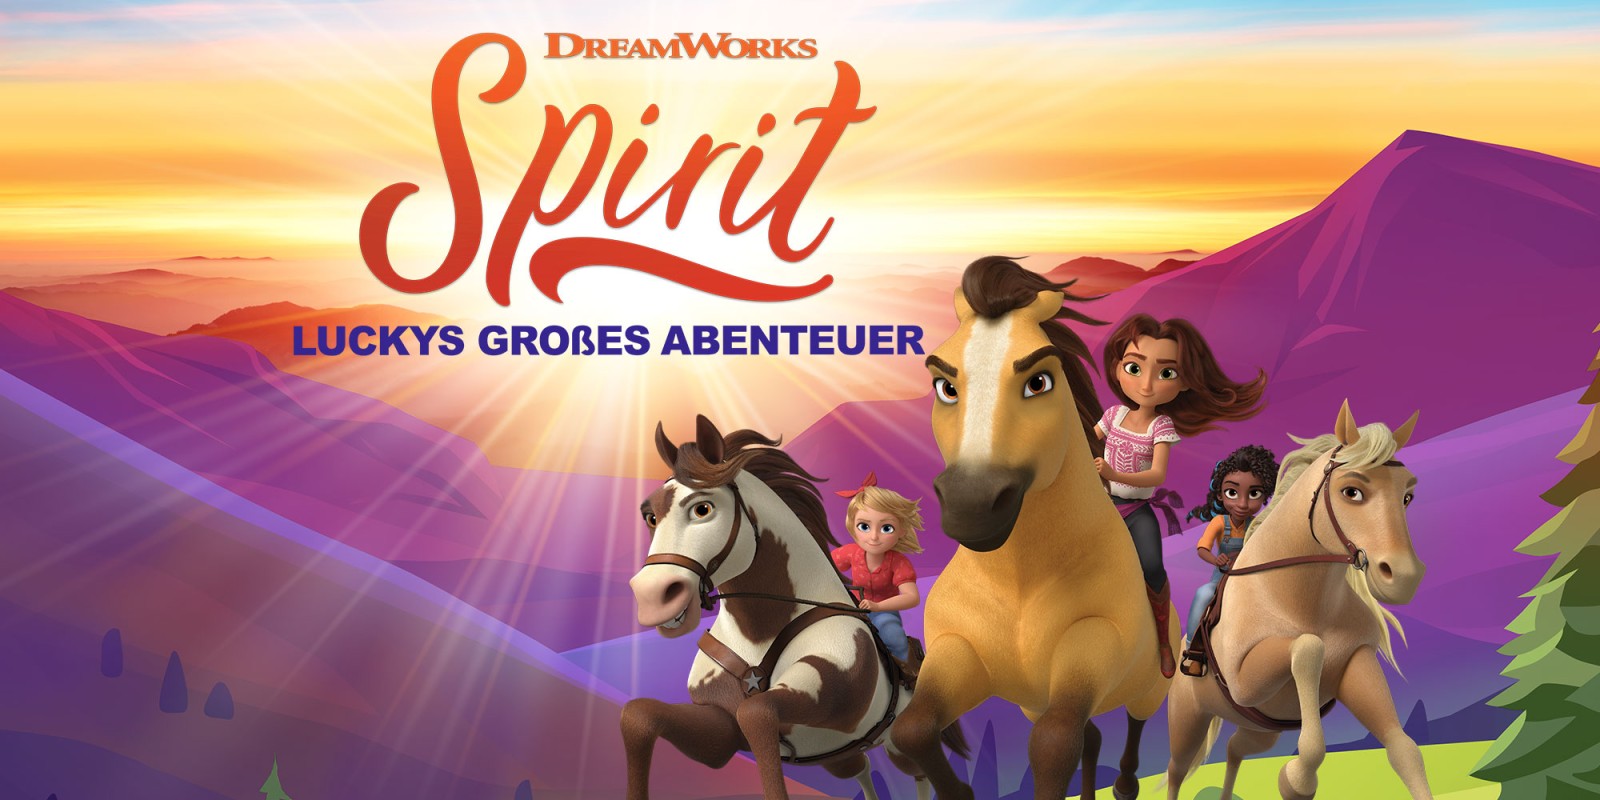 DreamWorks Spirit Luckys großes Abenteuer